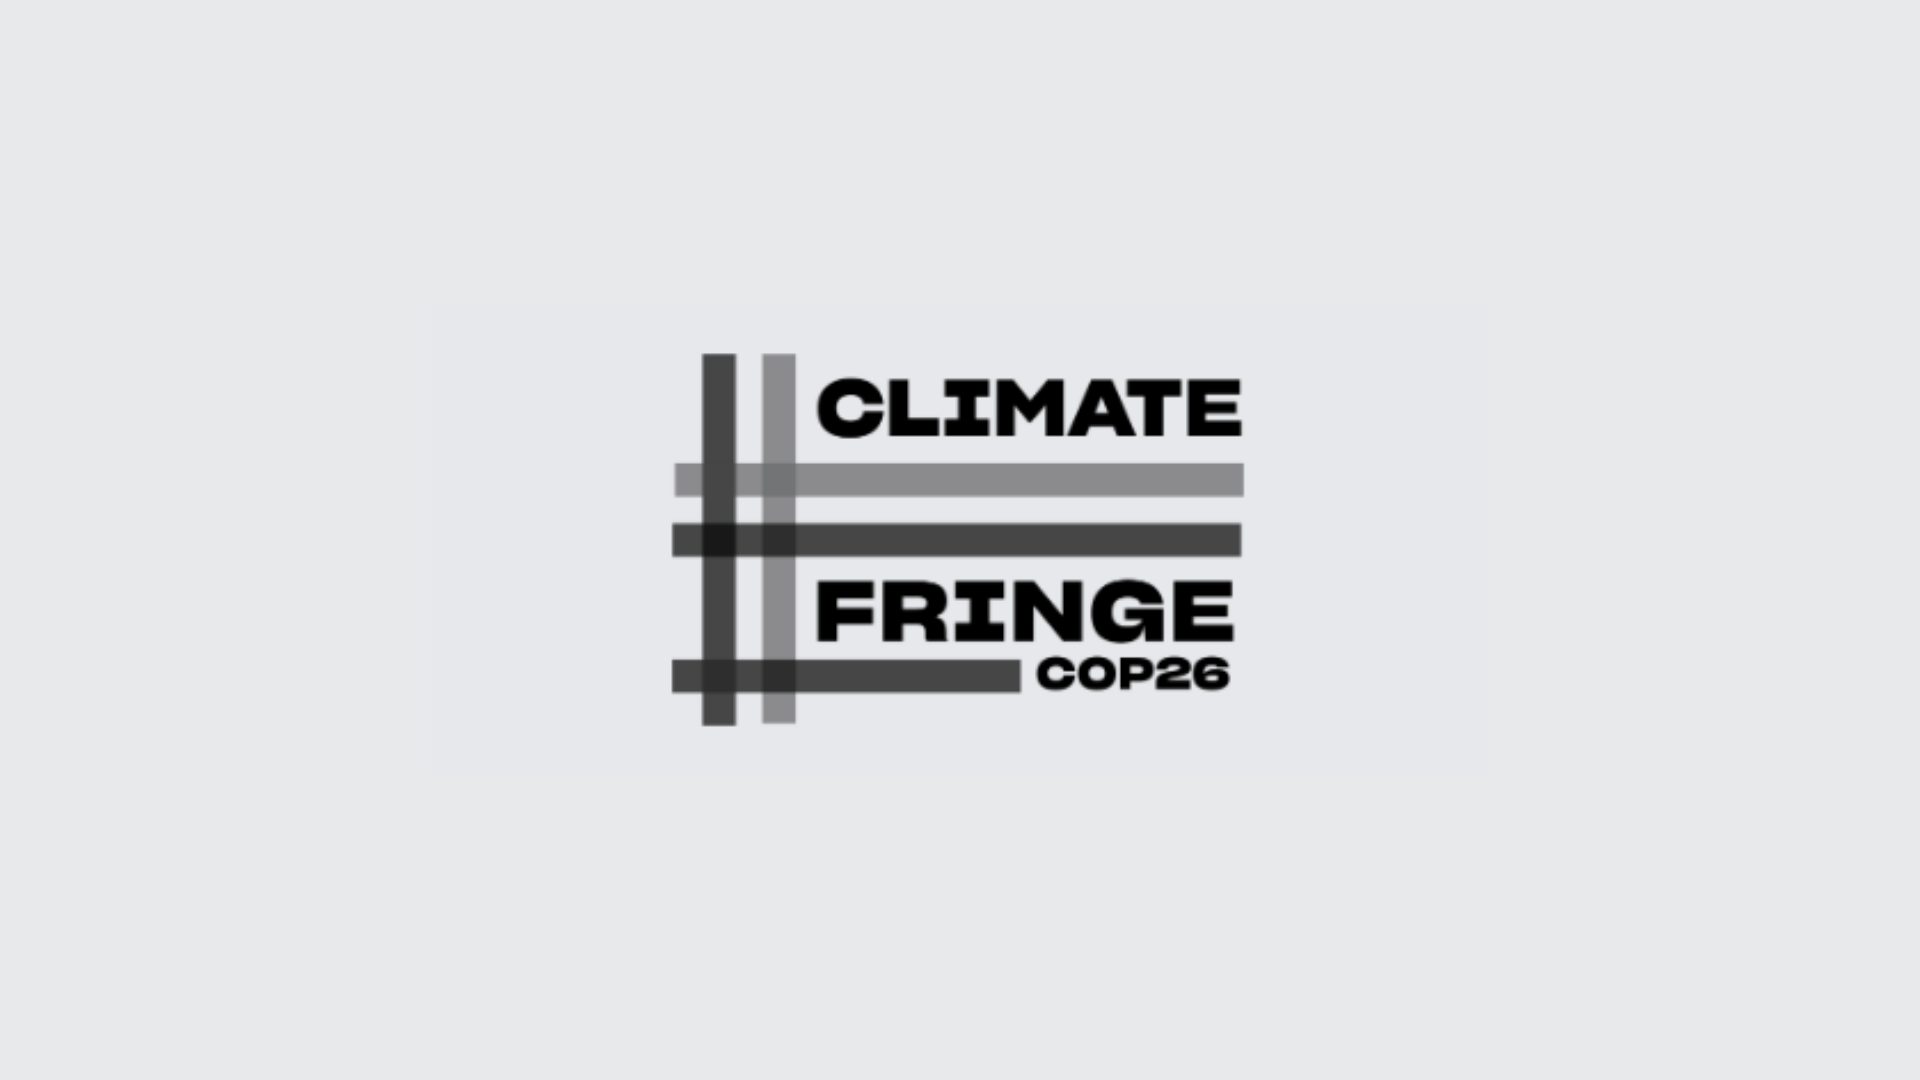 Climate Fringe COP26